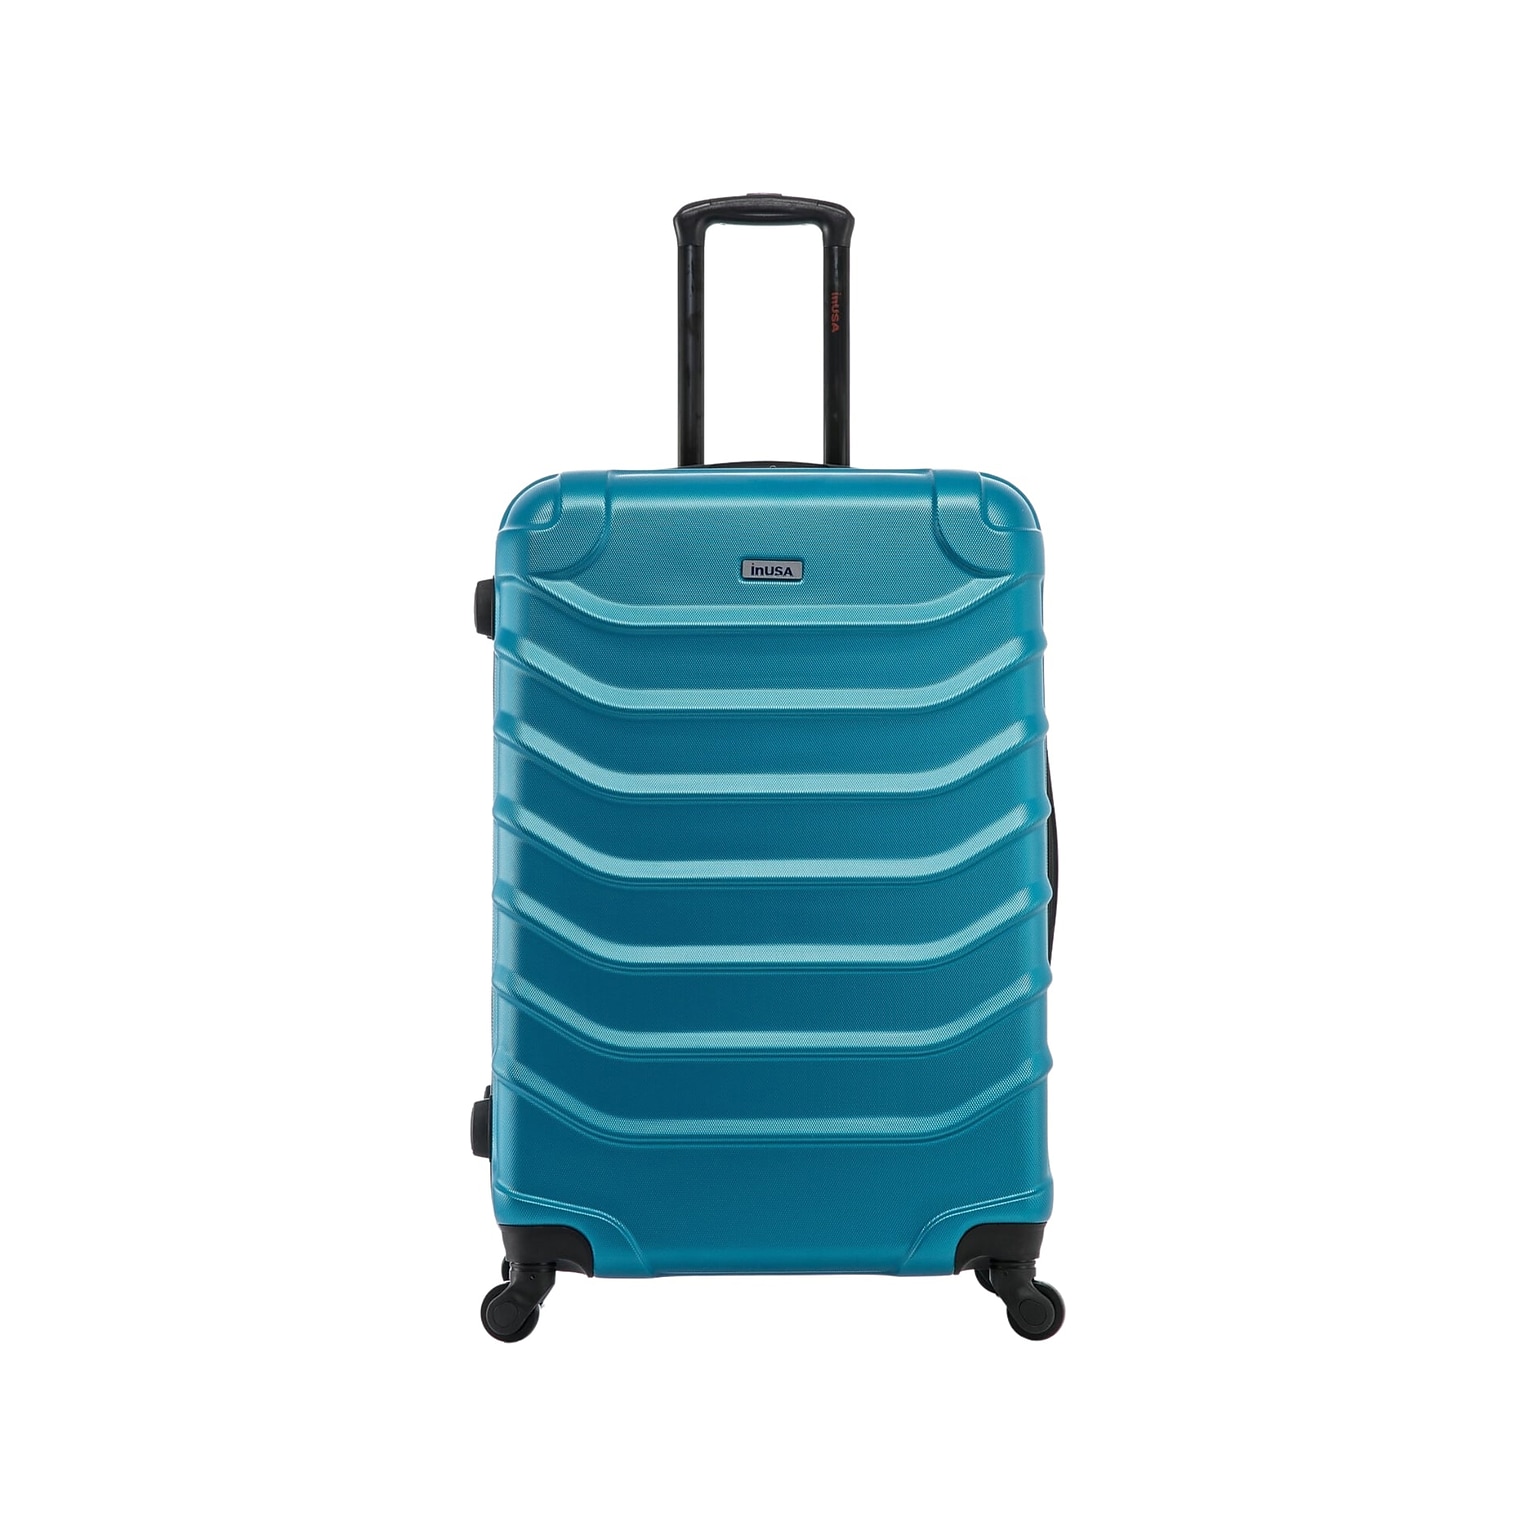 InUSA Endurance 29.33 Hardside Suitcase, 4-Wheeled Spinner, Teal (IUEND00L-TEA)